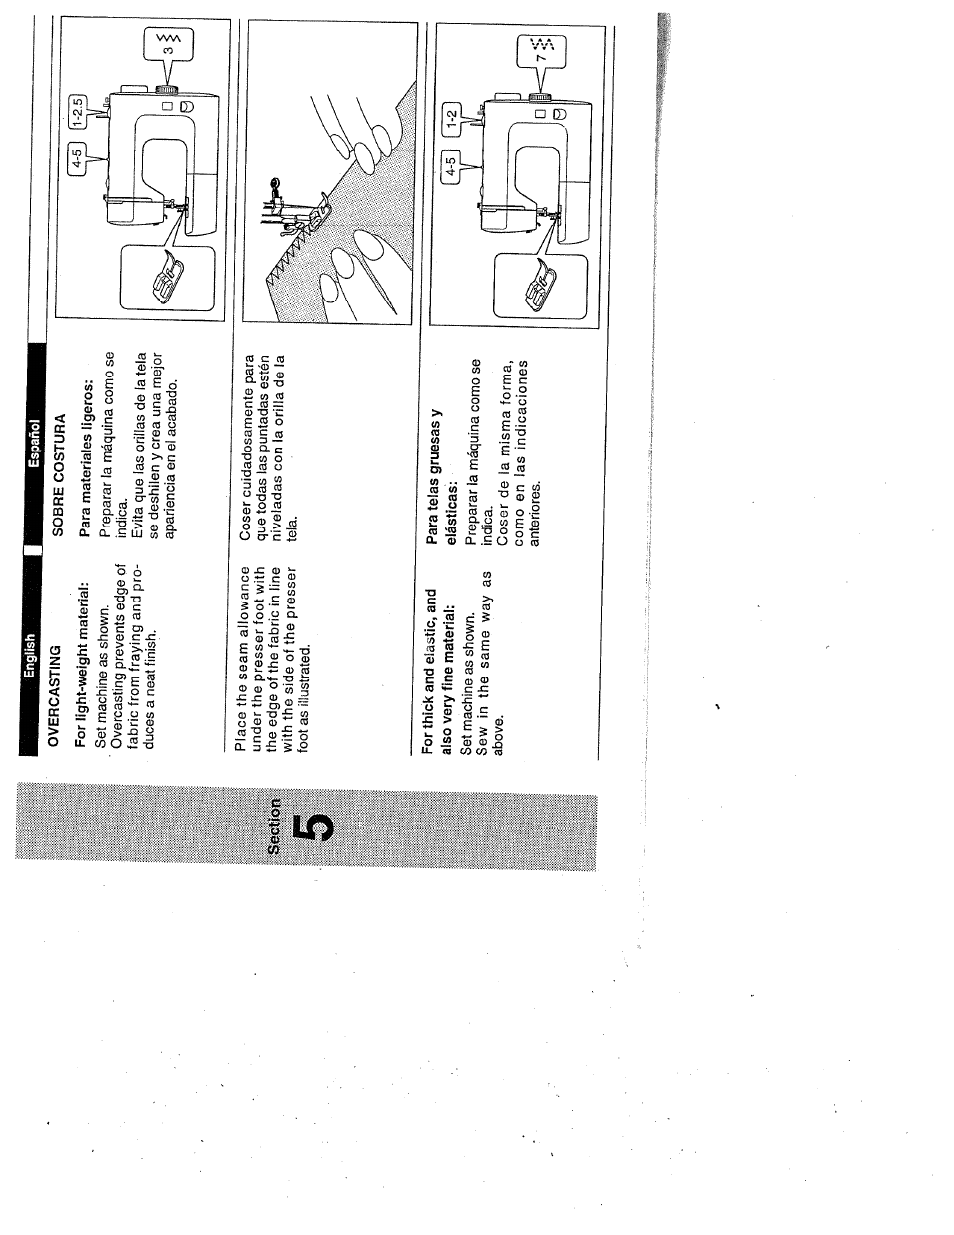 SINGER W1999 User Manual | Page 45 / 67